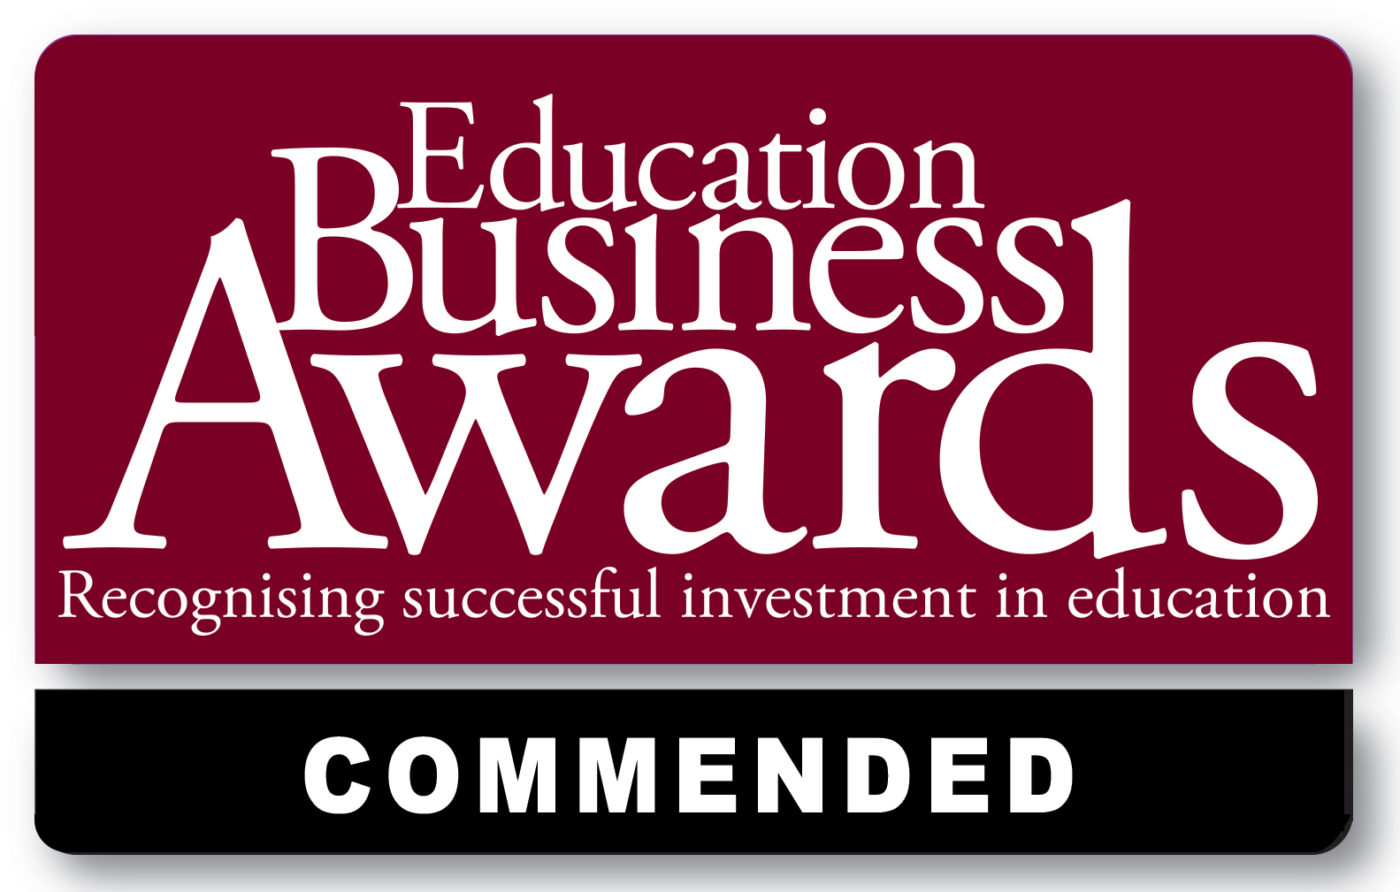 Education Business Awards